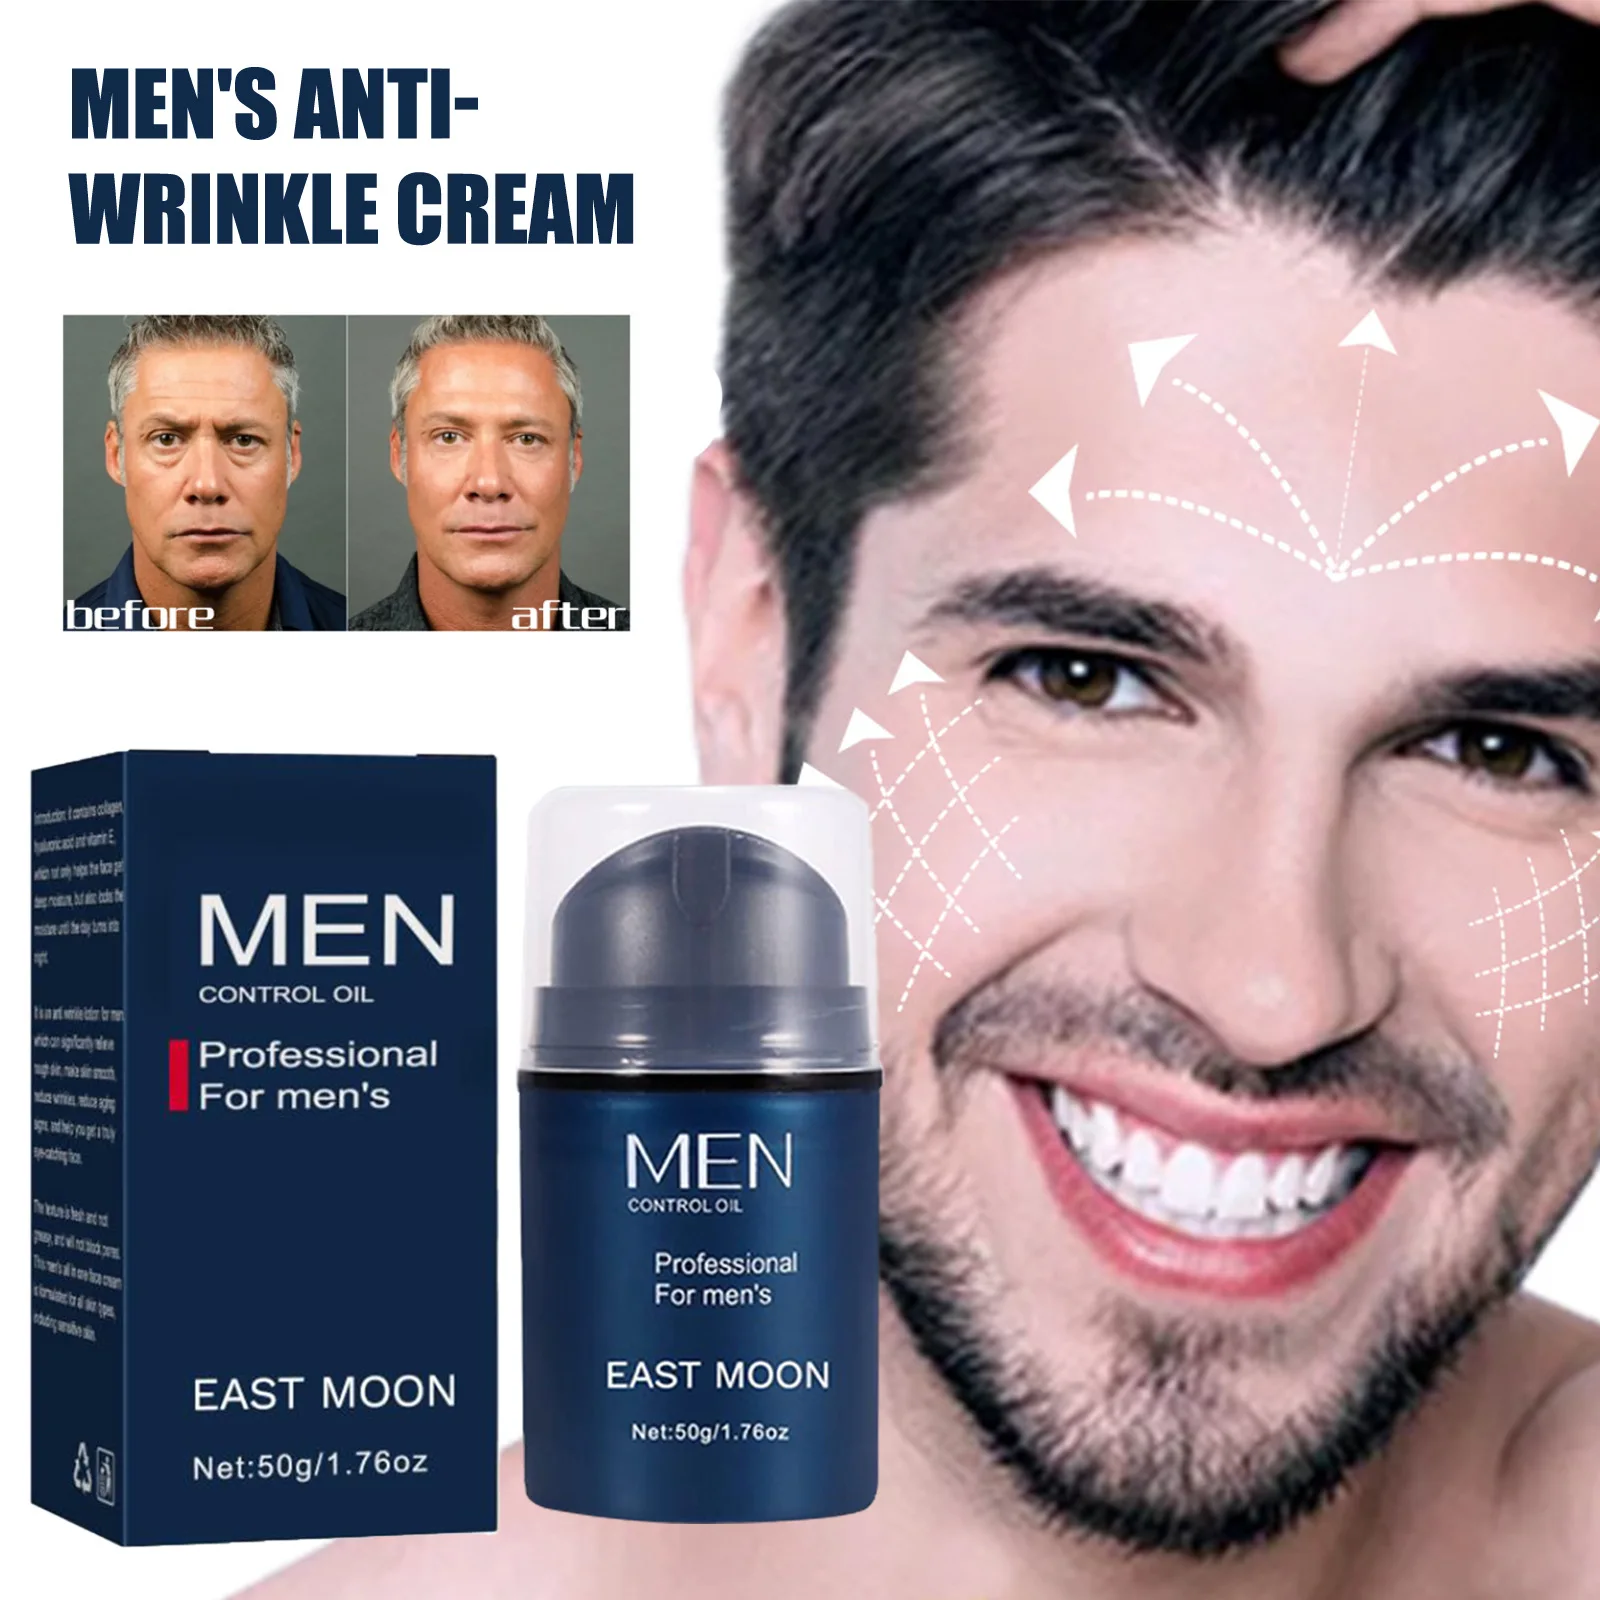 

50g Men's Anti-Wrinkle Cream, Firming Skin, Anti-Wrinkle, Brightening, Skin Tone, Hydrating, Revitalizing, Rejuvenating Cream